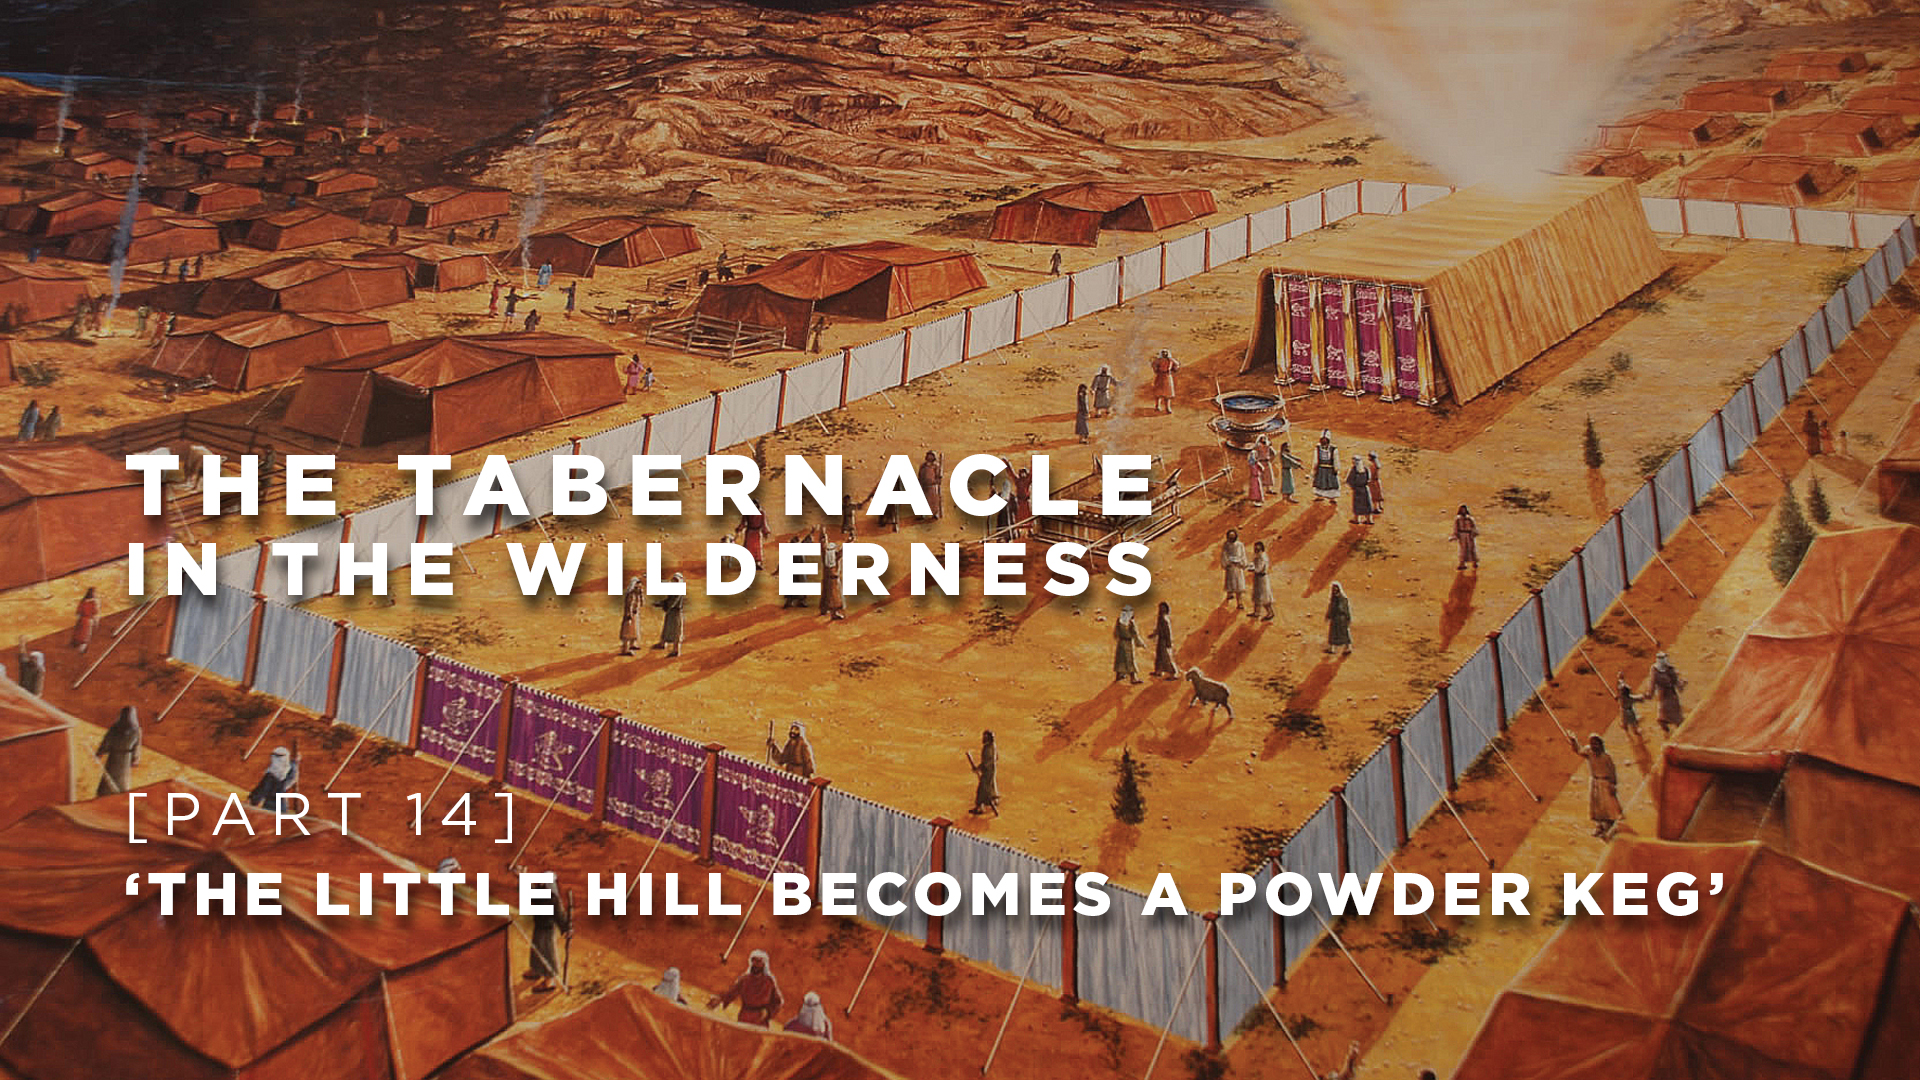 Part 14 - The Little Hill Becomes A Powder Keg